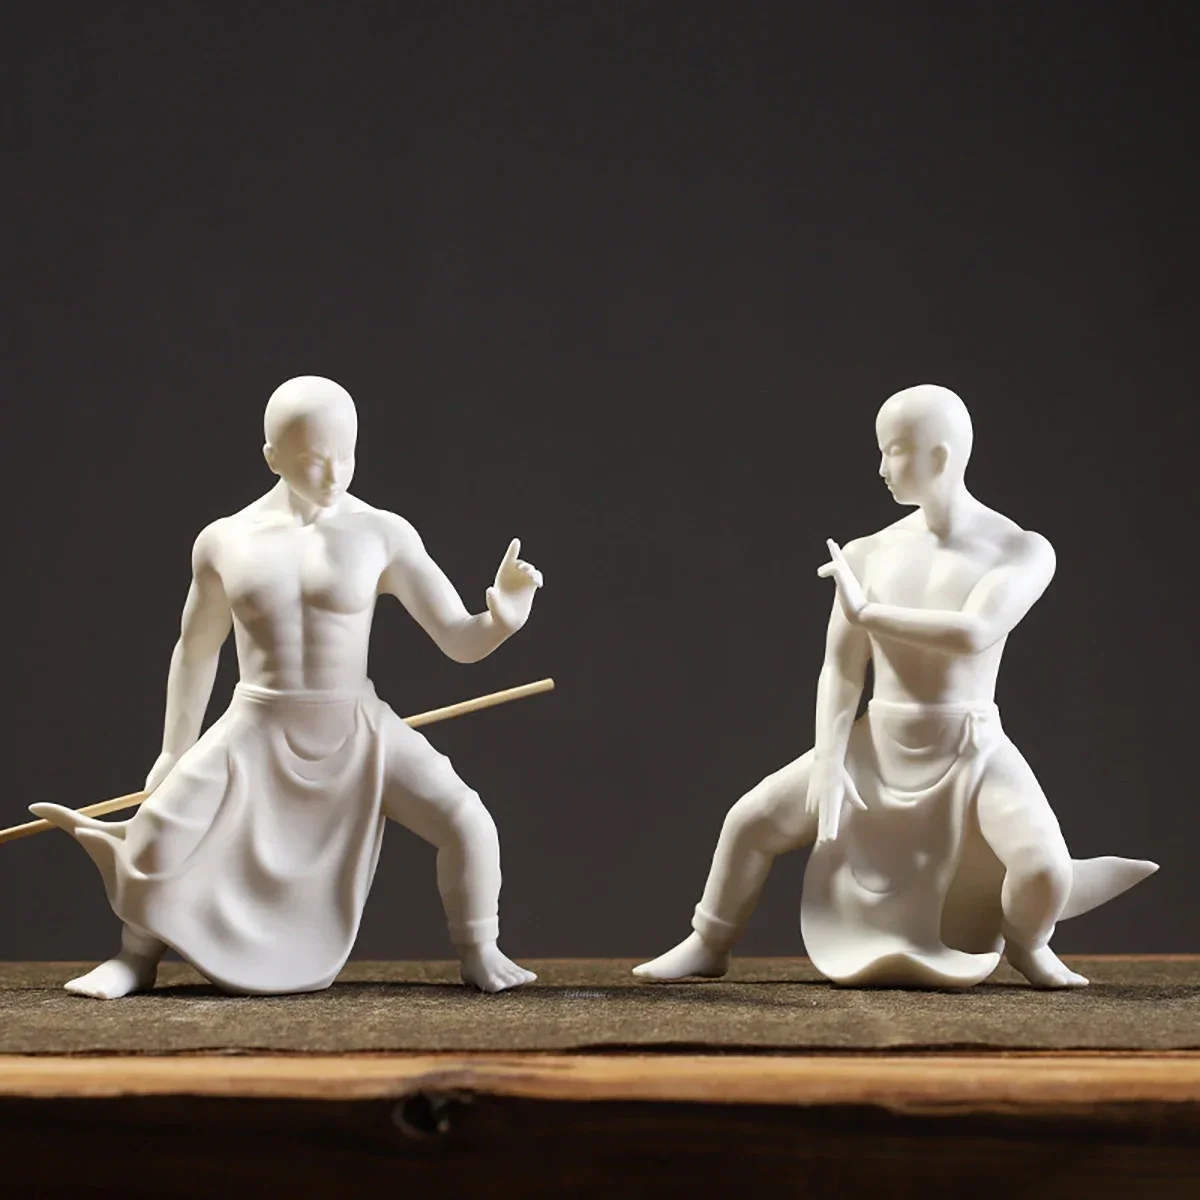 

White Ceramic Kung Fu Warrior Monk Figurine Blanc De Chine Artwork Neo Chinese Home Decorative Ornament Dehua Porcelain Product